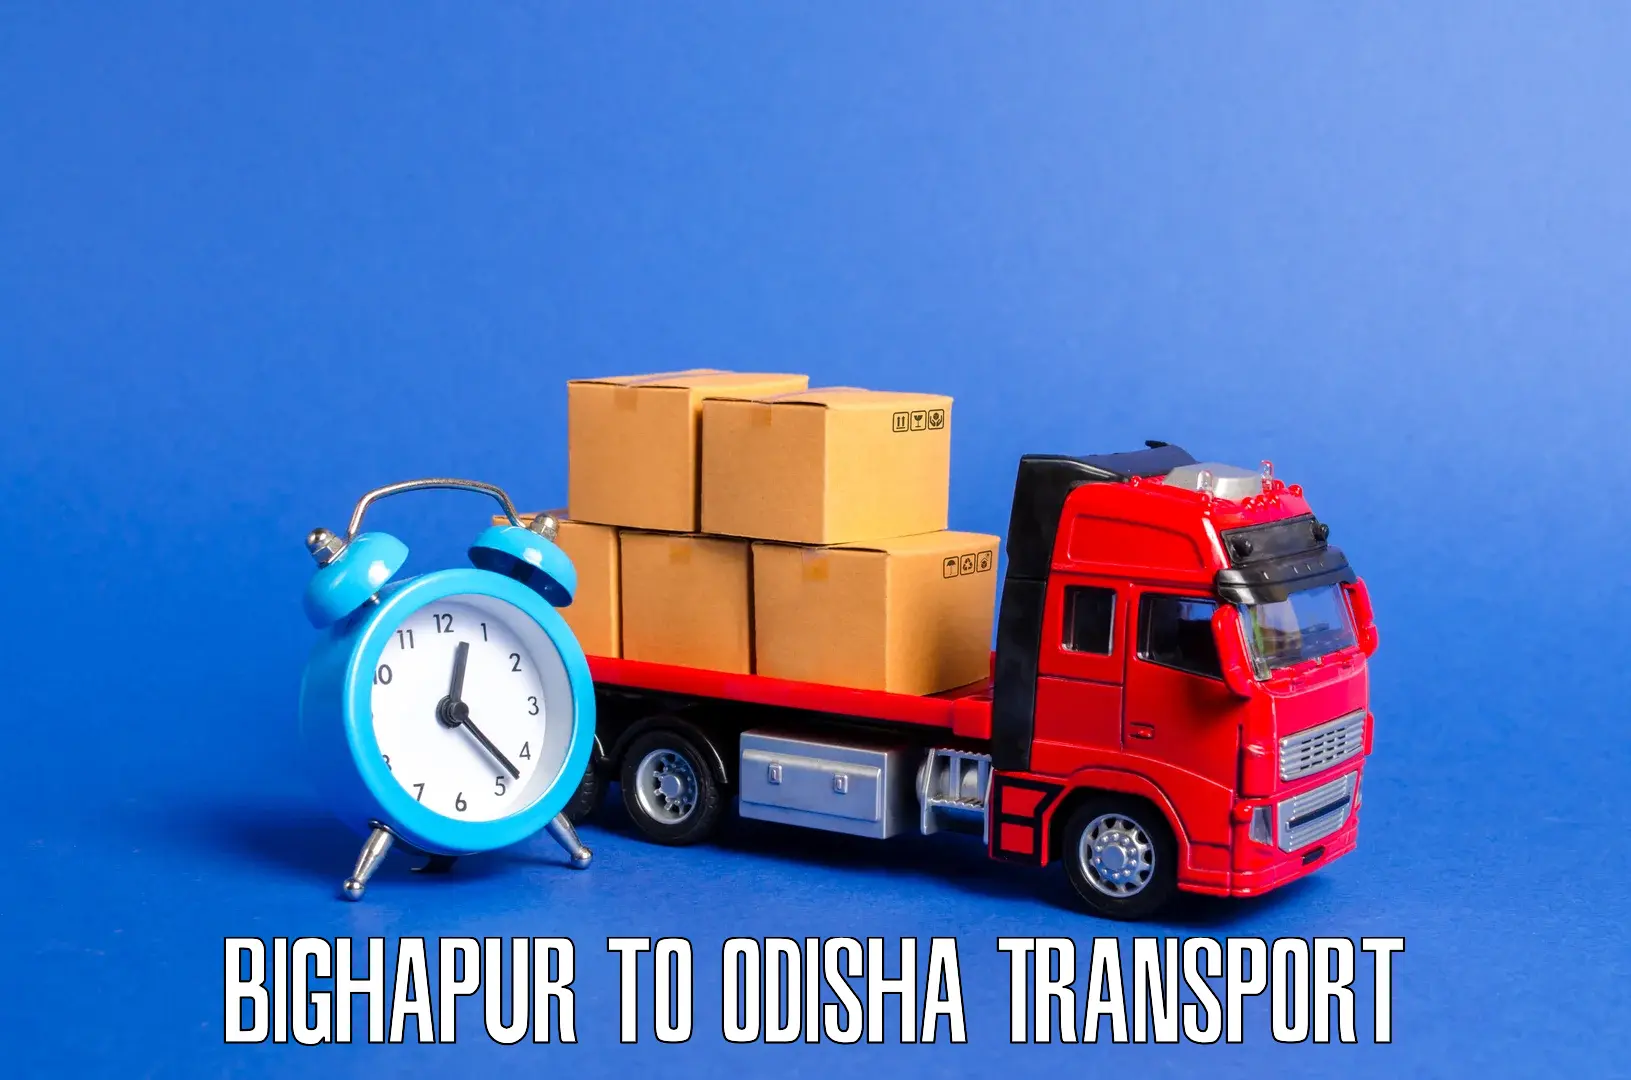 Furniture transport service Bighapur to Dandisahi